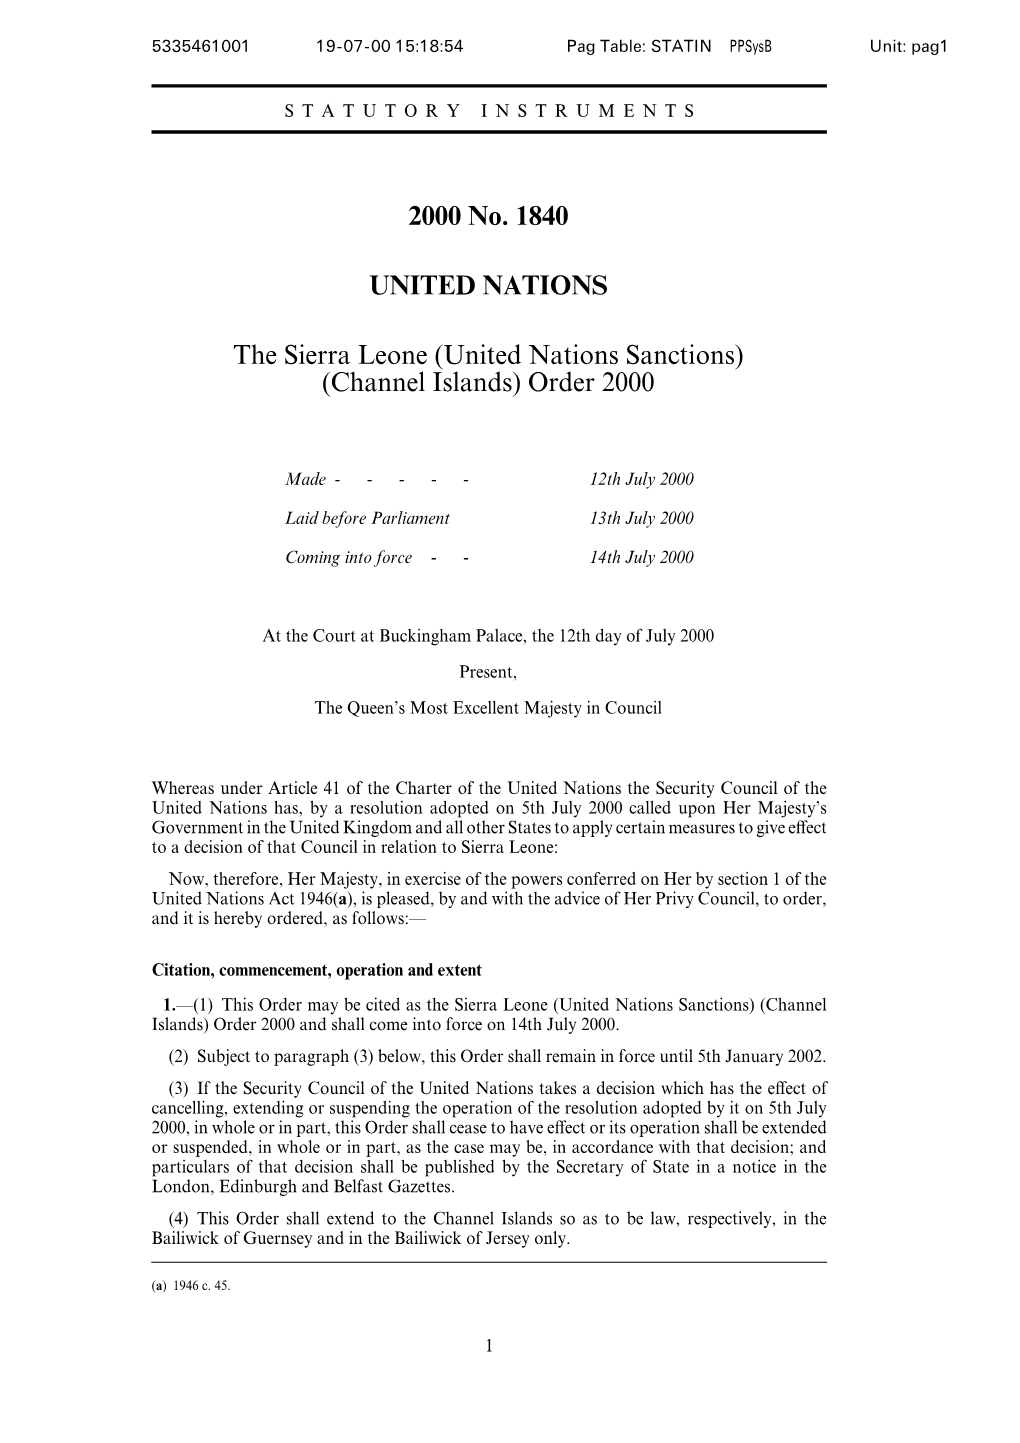 2000 No. 1840 UNITED NATIONS the Sierra Leone